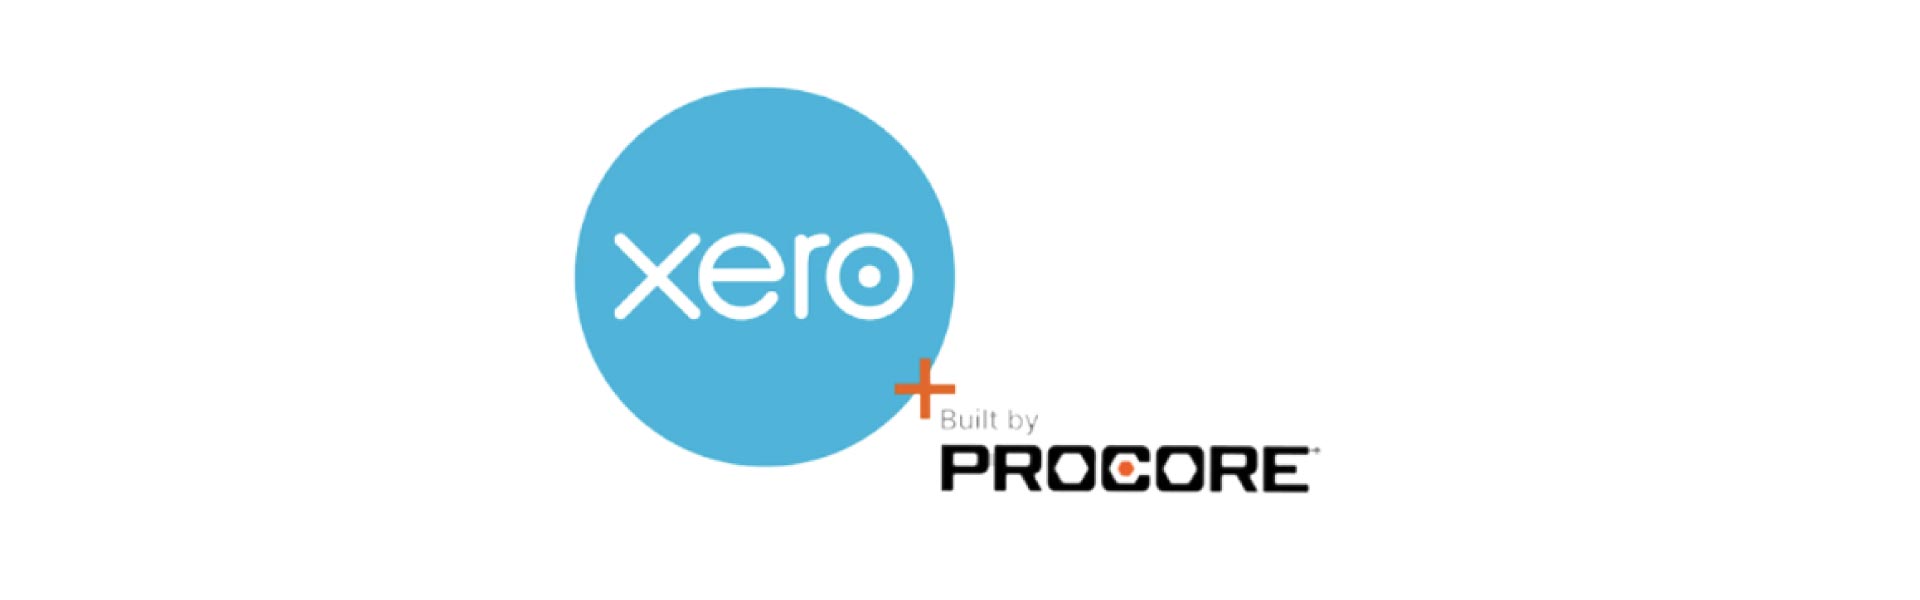 xero-procore-logo.png